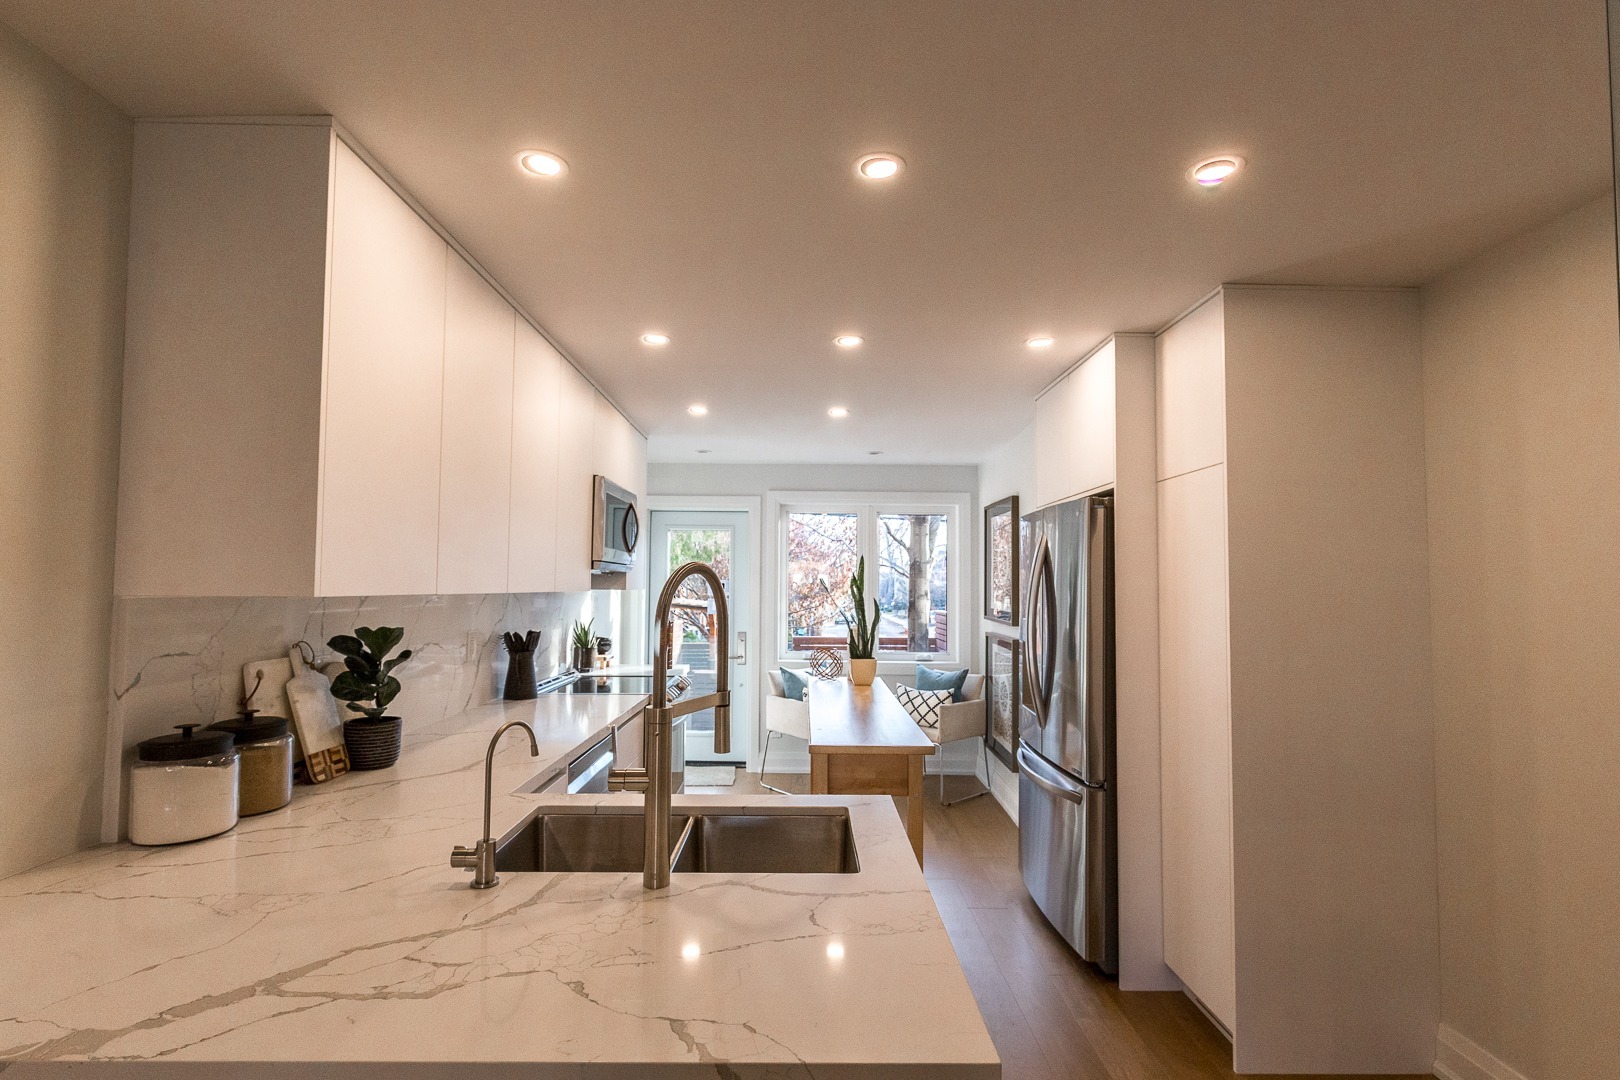 2020 - Custom kitchen in 10' wide space